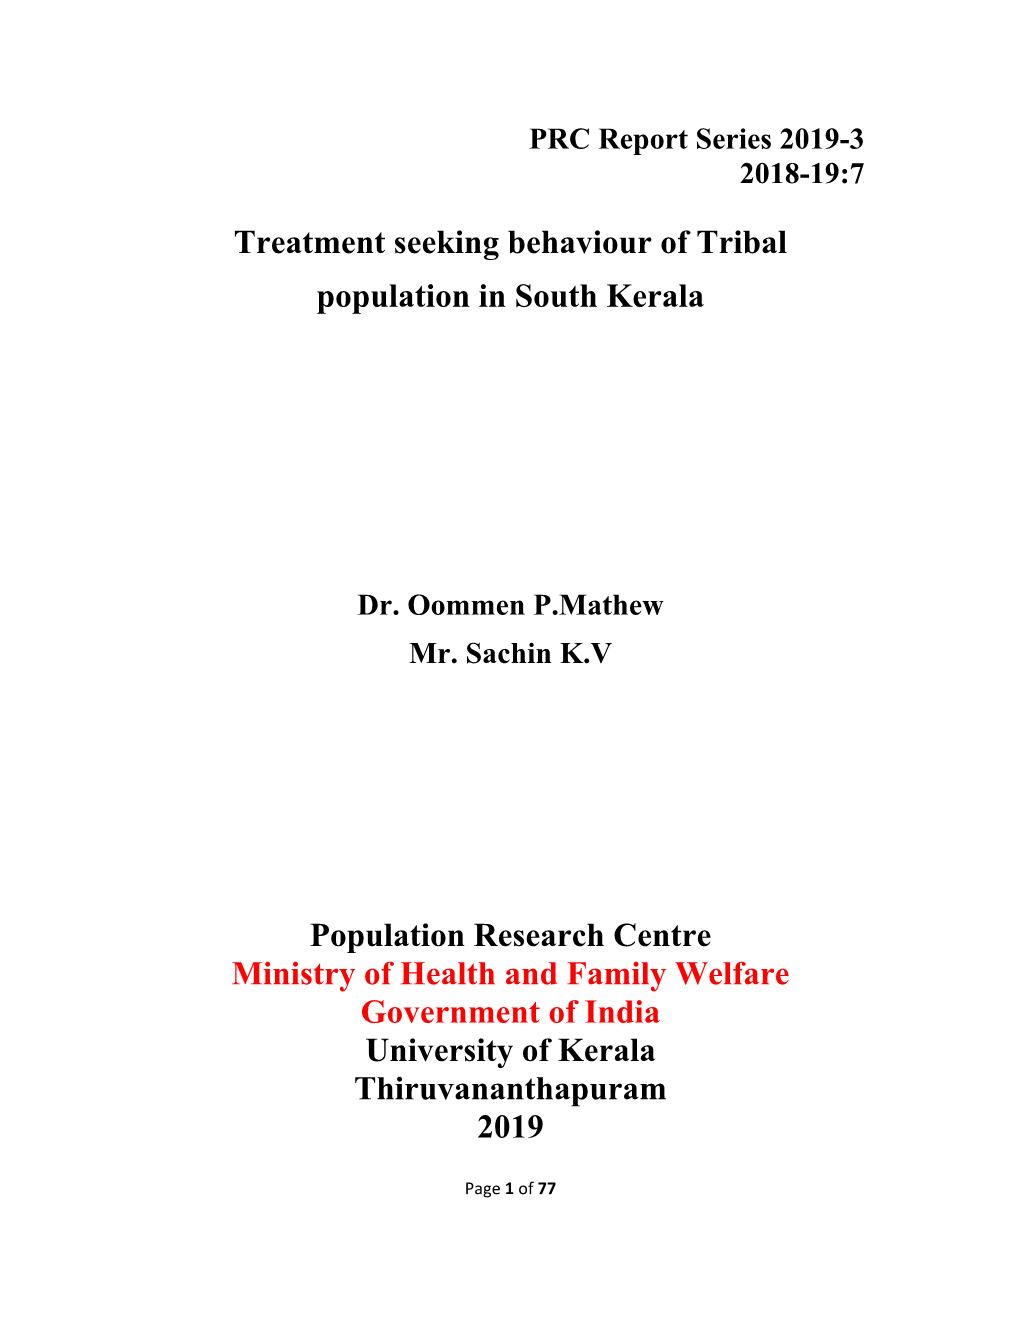 Treatment Seeking Behaviour of Tribal Population in South Kerala